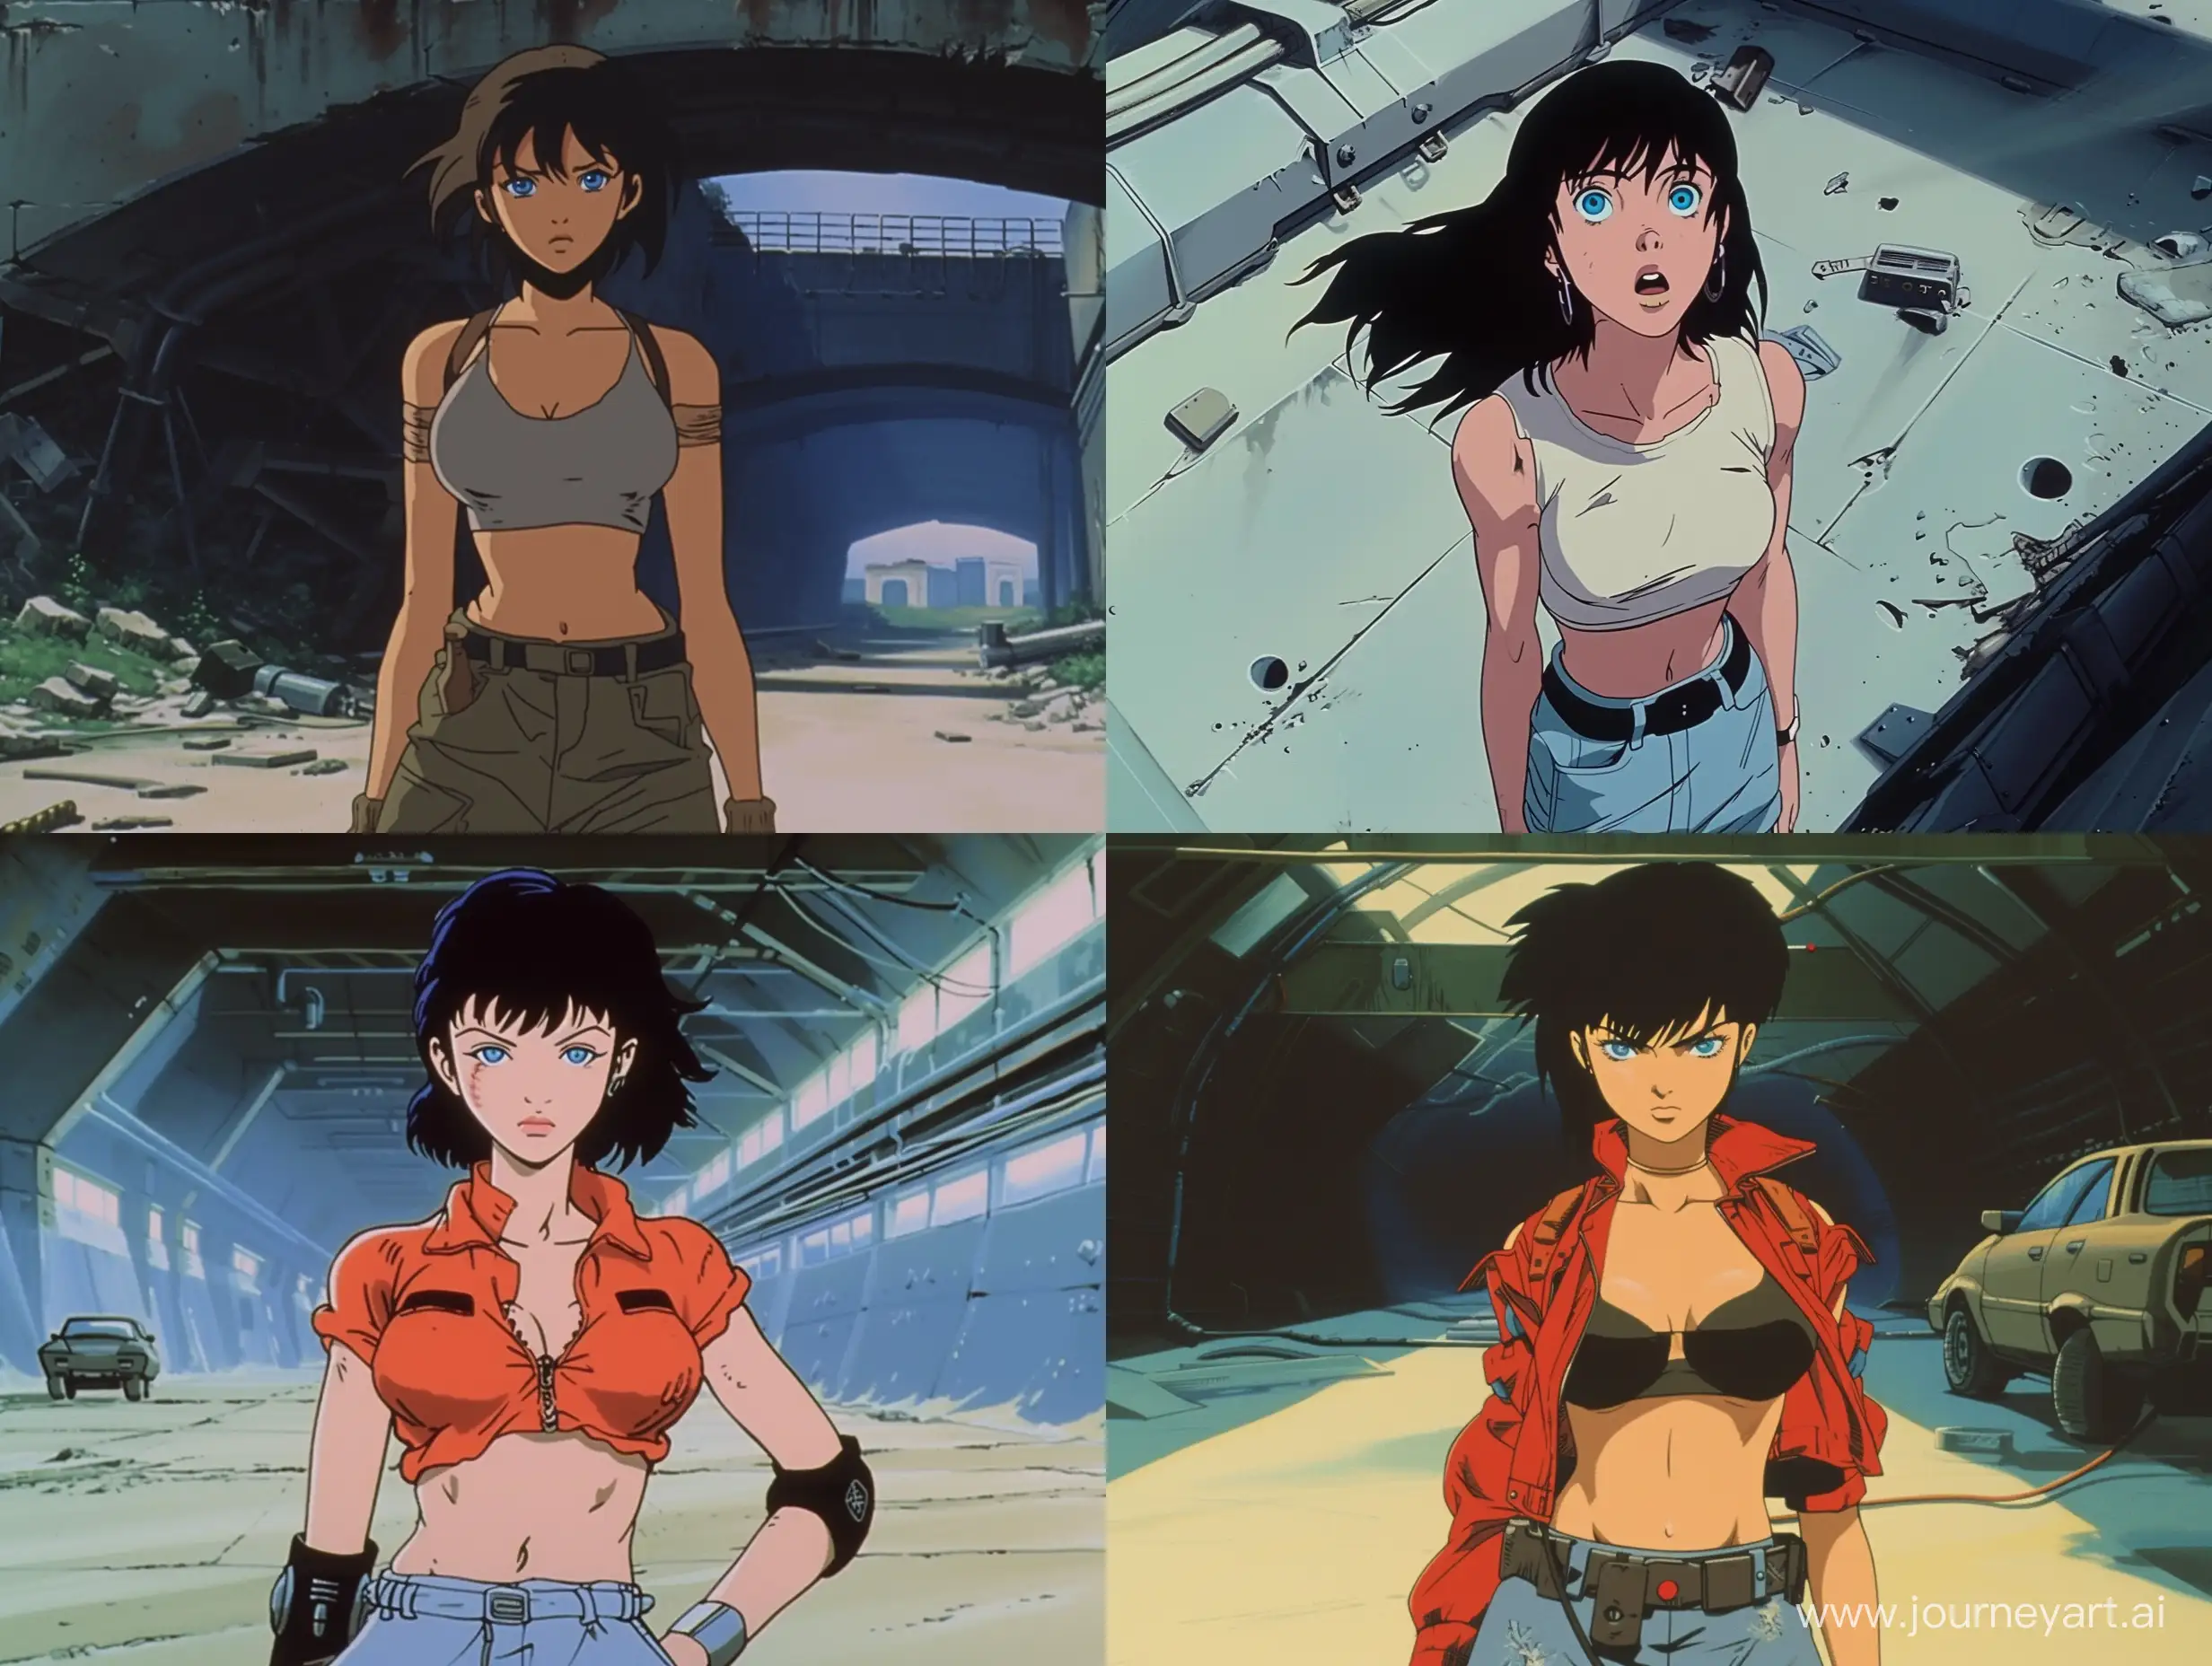 Futuristic-Anime-Nostalgia-90s-BlueEyed-Woman-in-Open-Area